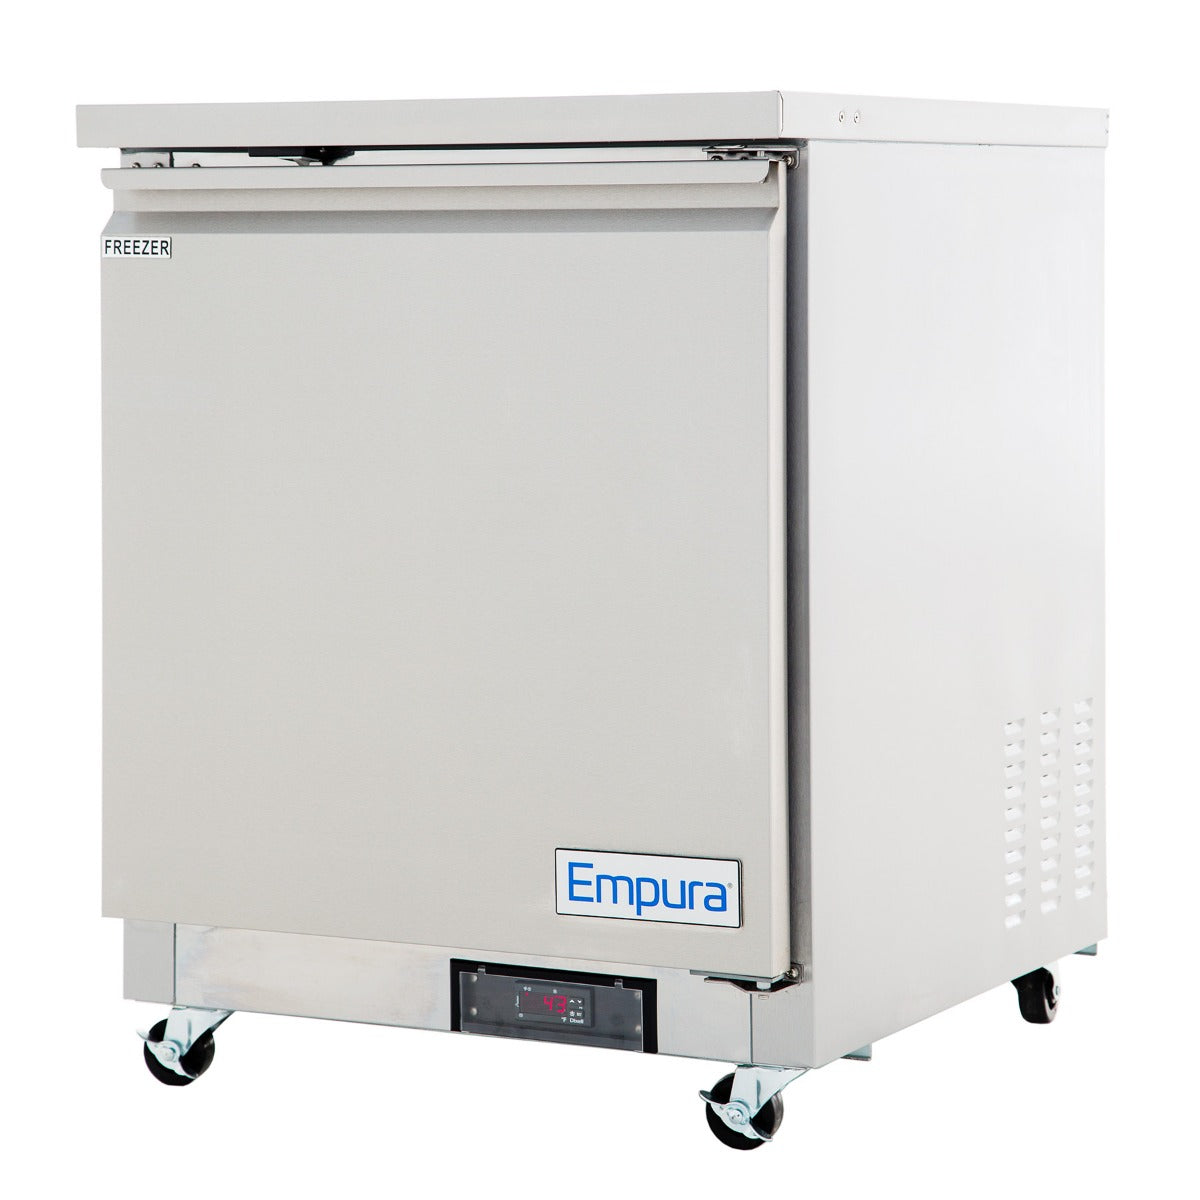 Empura E-KUC27F 27.8" Stainless Steel Undercounter Freezer With 1 Door - 5.4 Cu Ft, 115 Volts